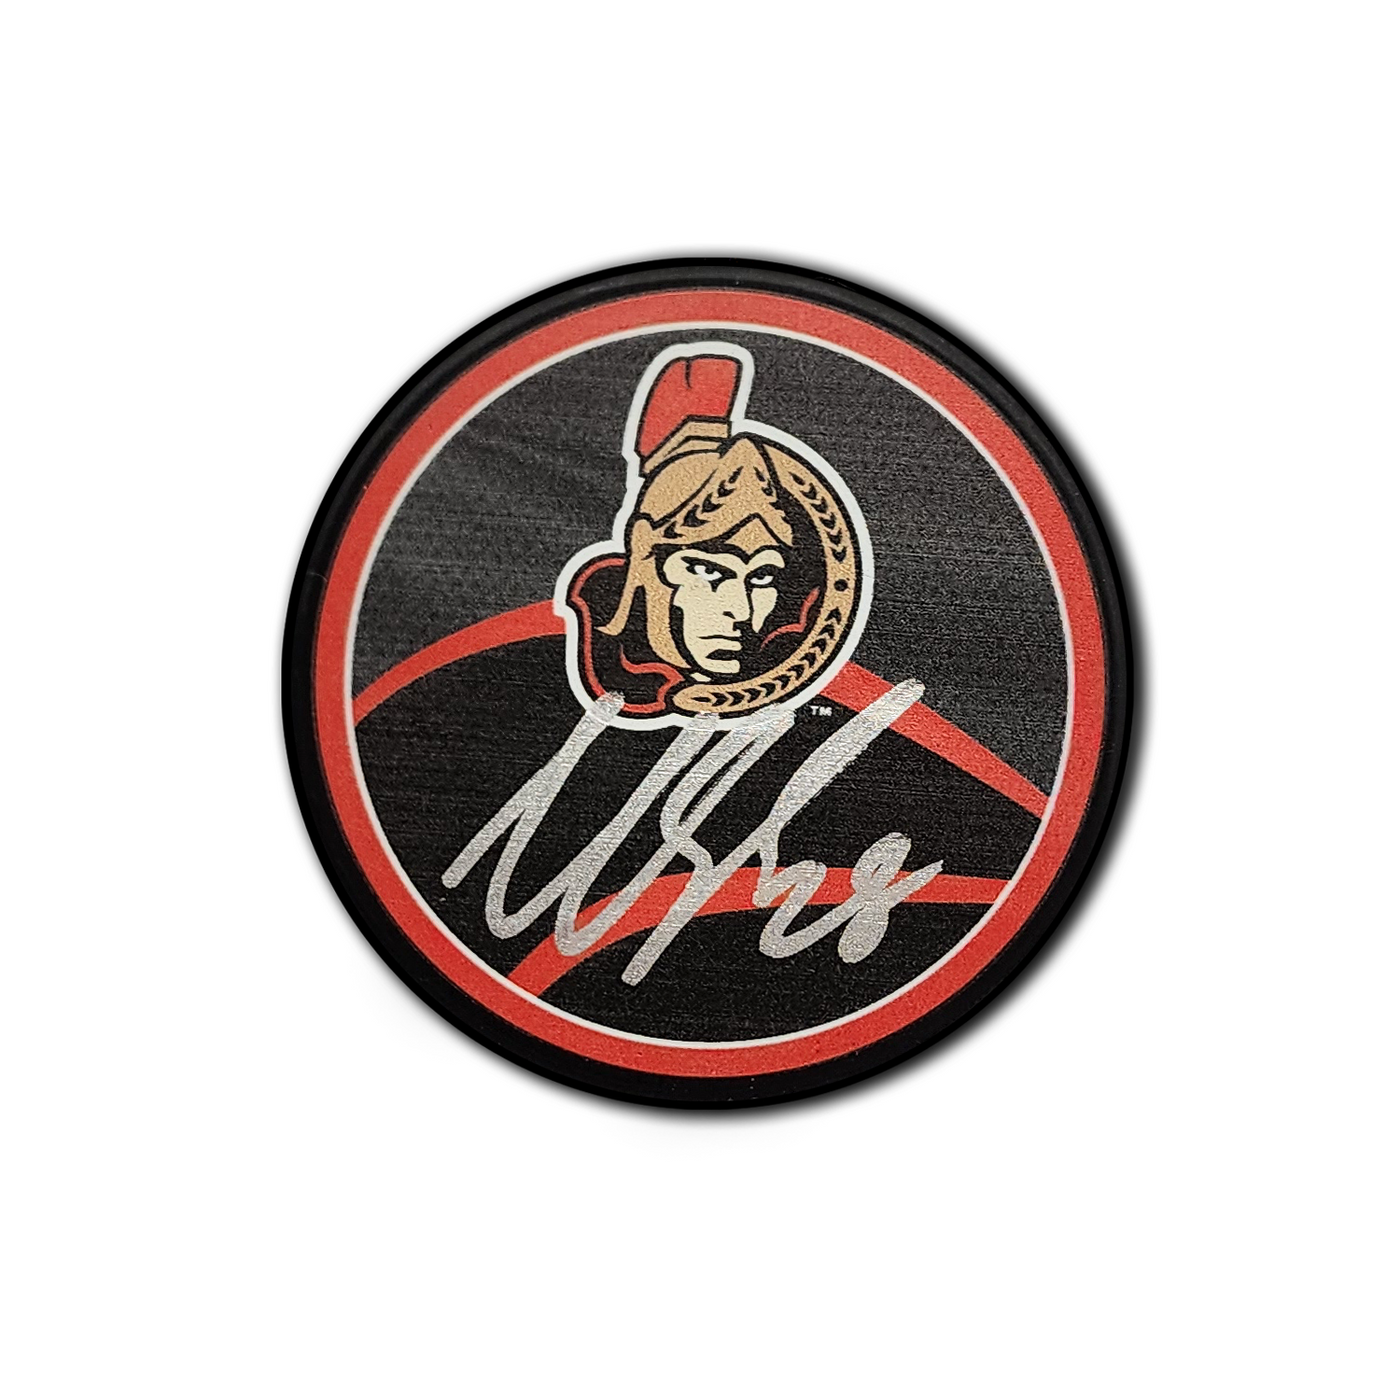 Claude Giroux Autographed Ottawa Senators Reverse Retro 2.0 Hockey Puck